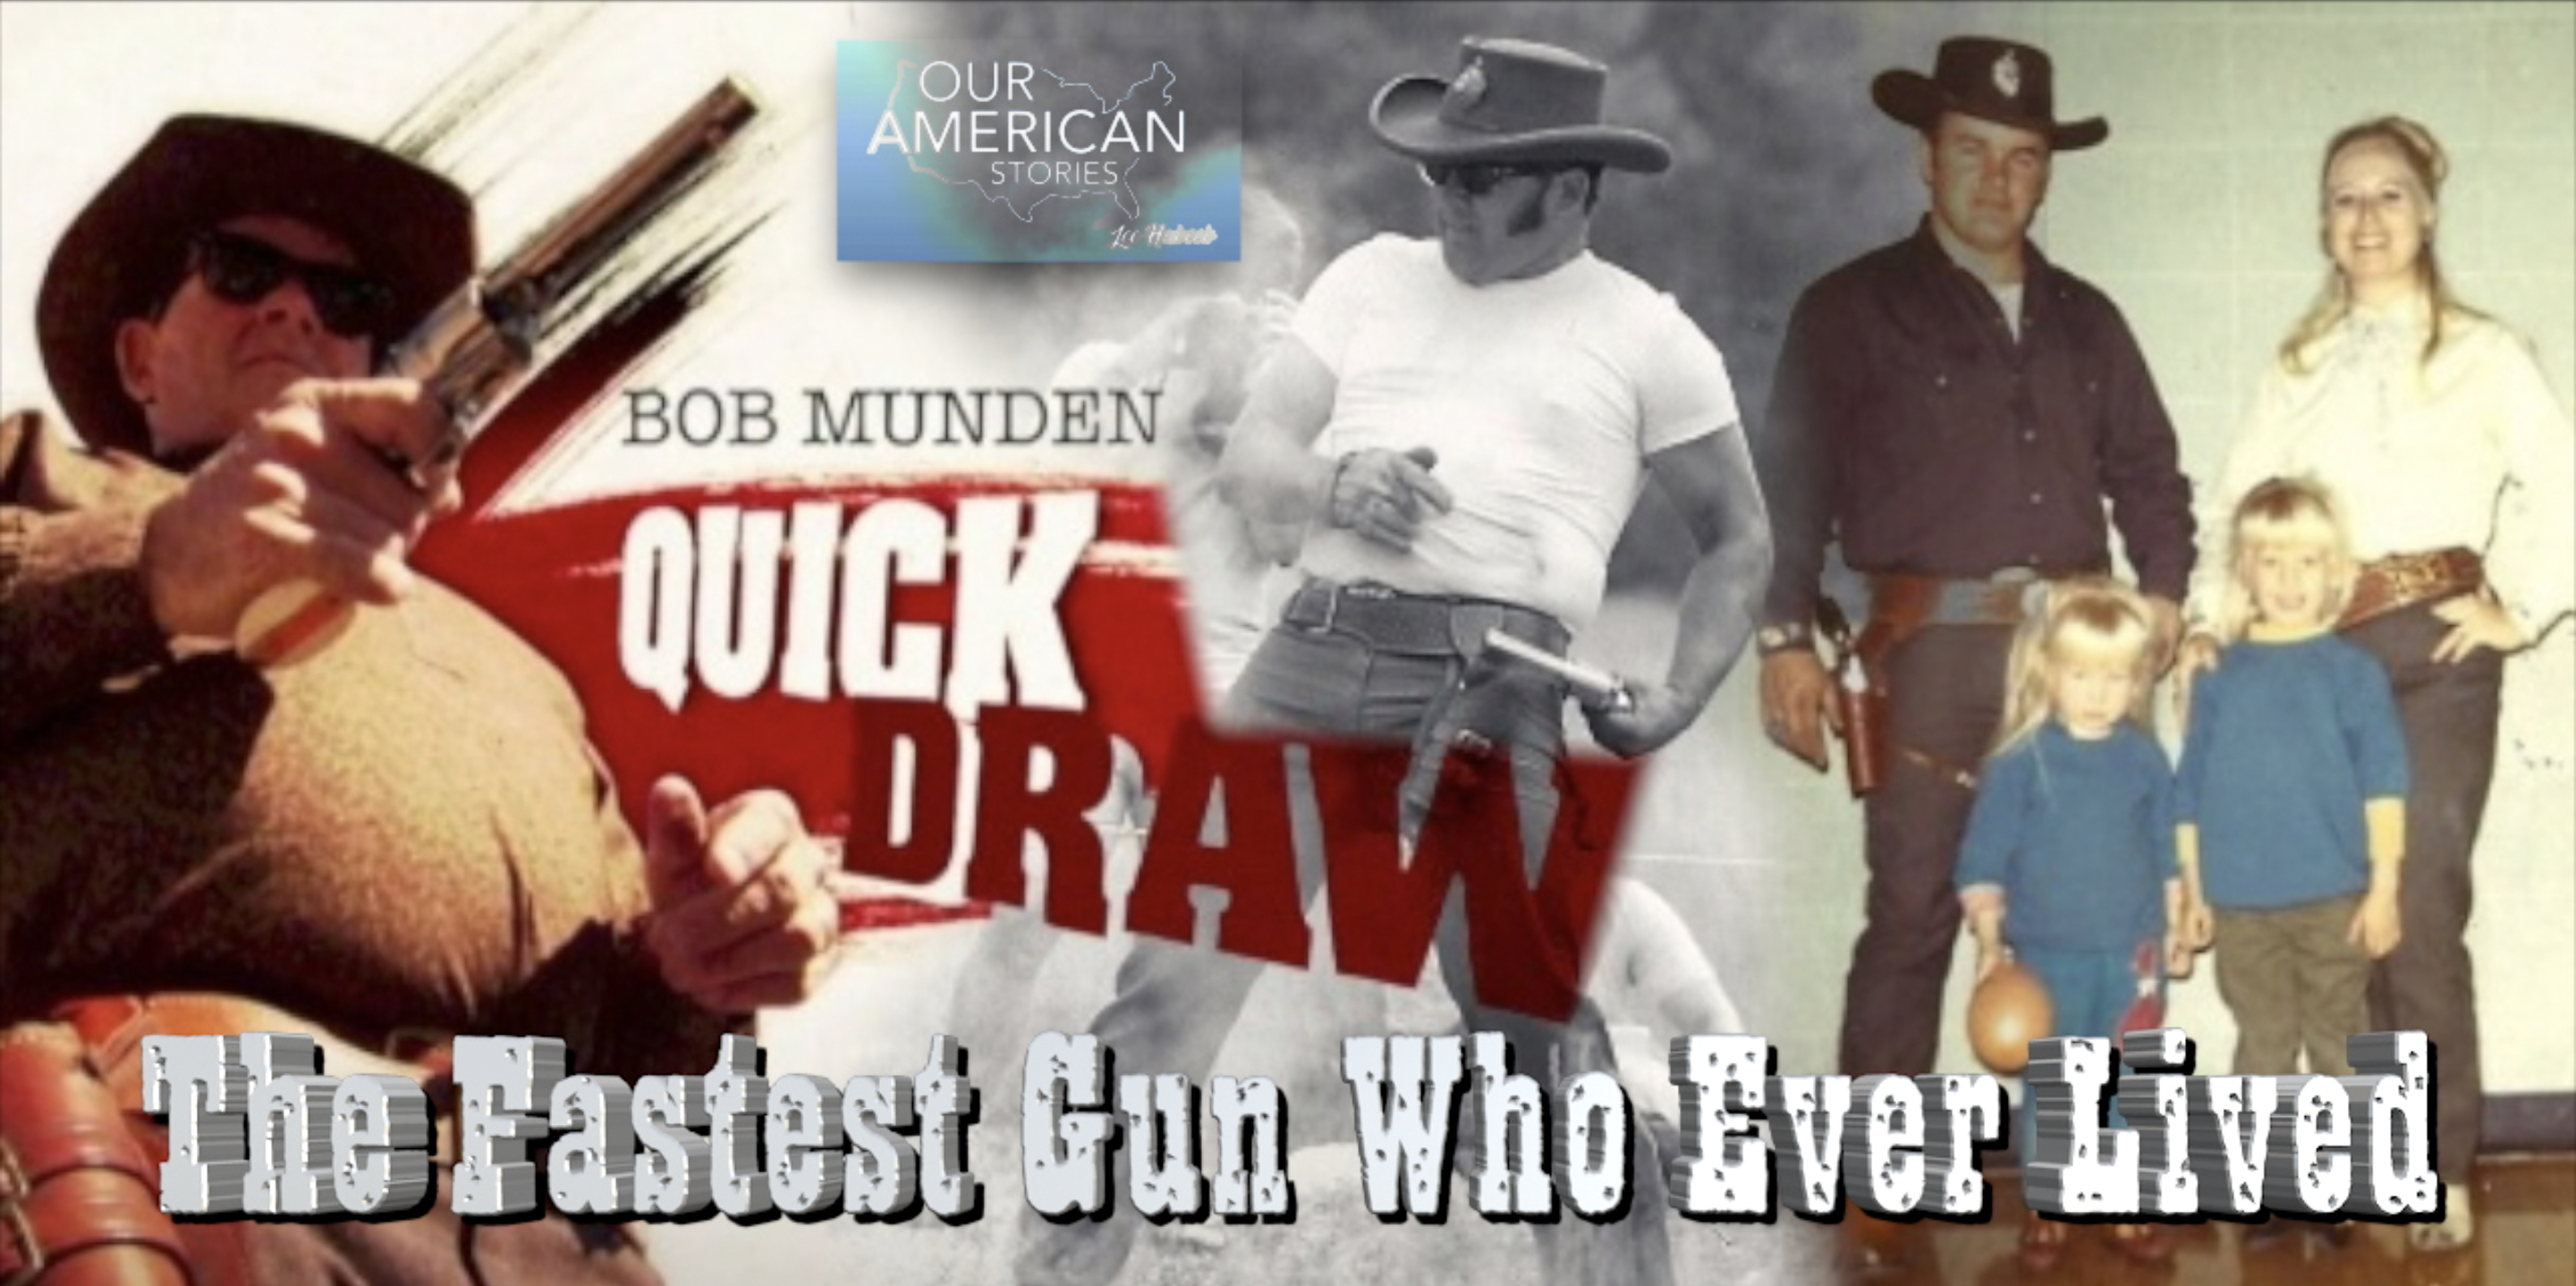 Bob Munden: “The Fastest Gun Who Ever Lived”